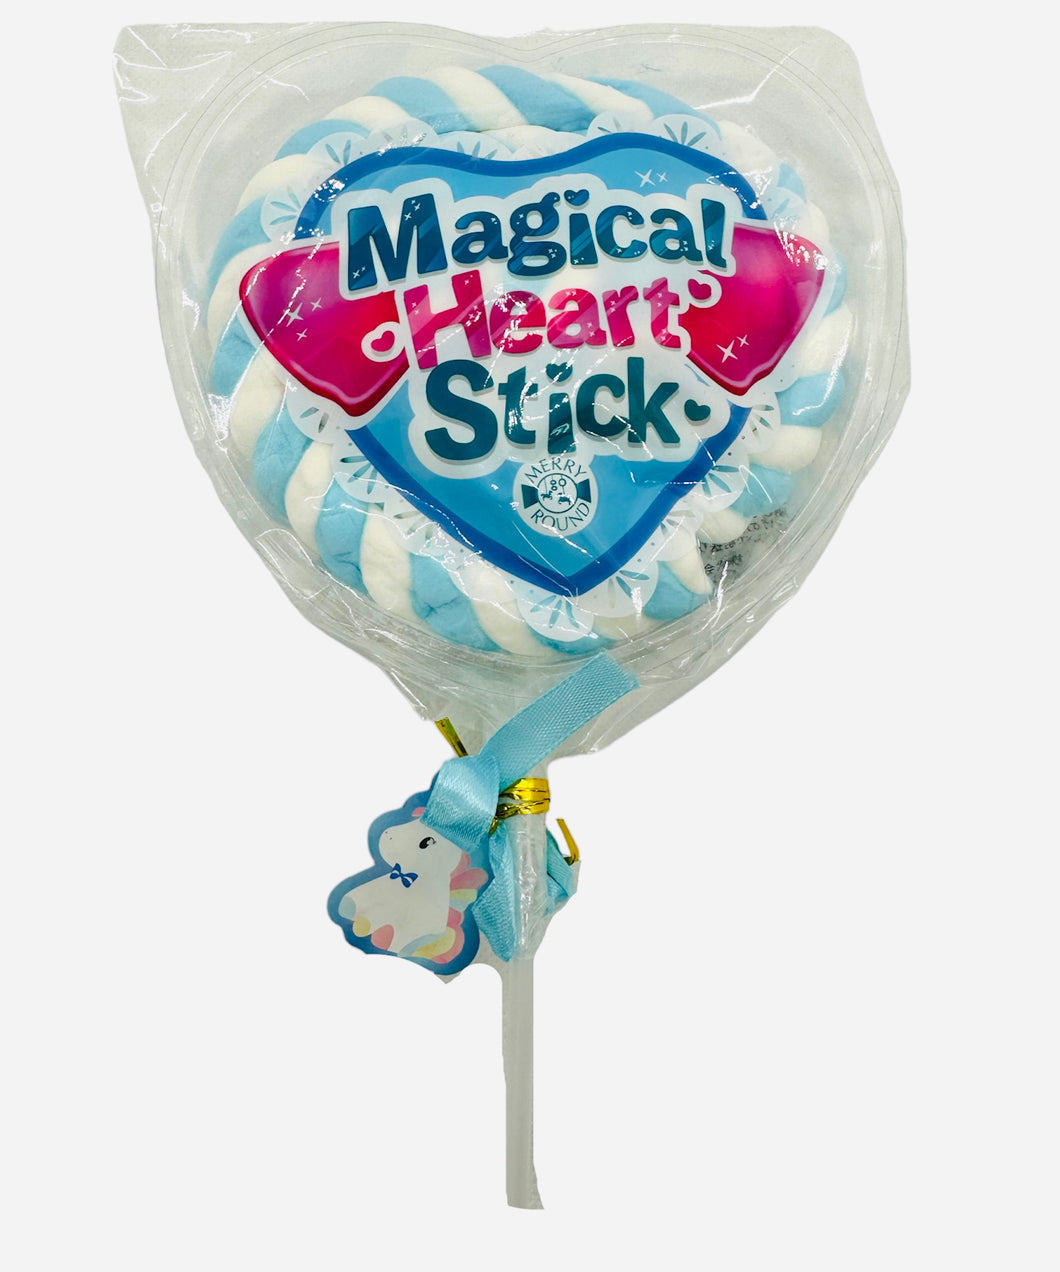 Magical Heart Stick Marshmallow